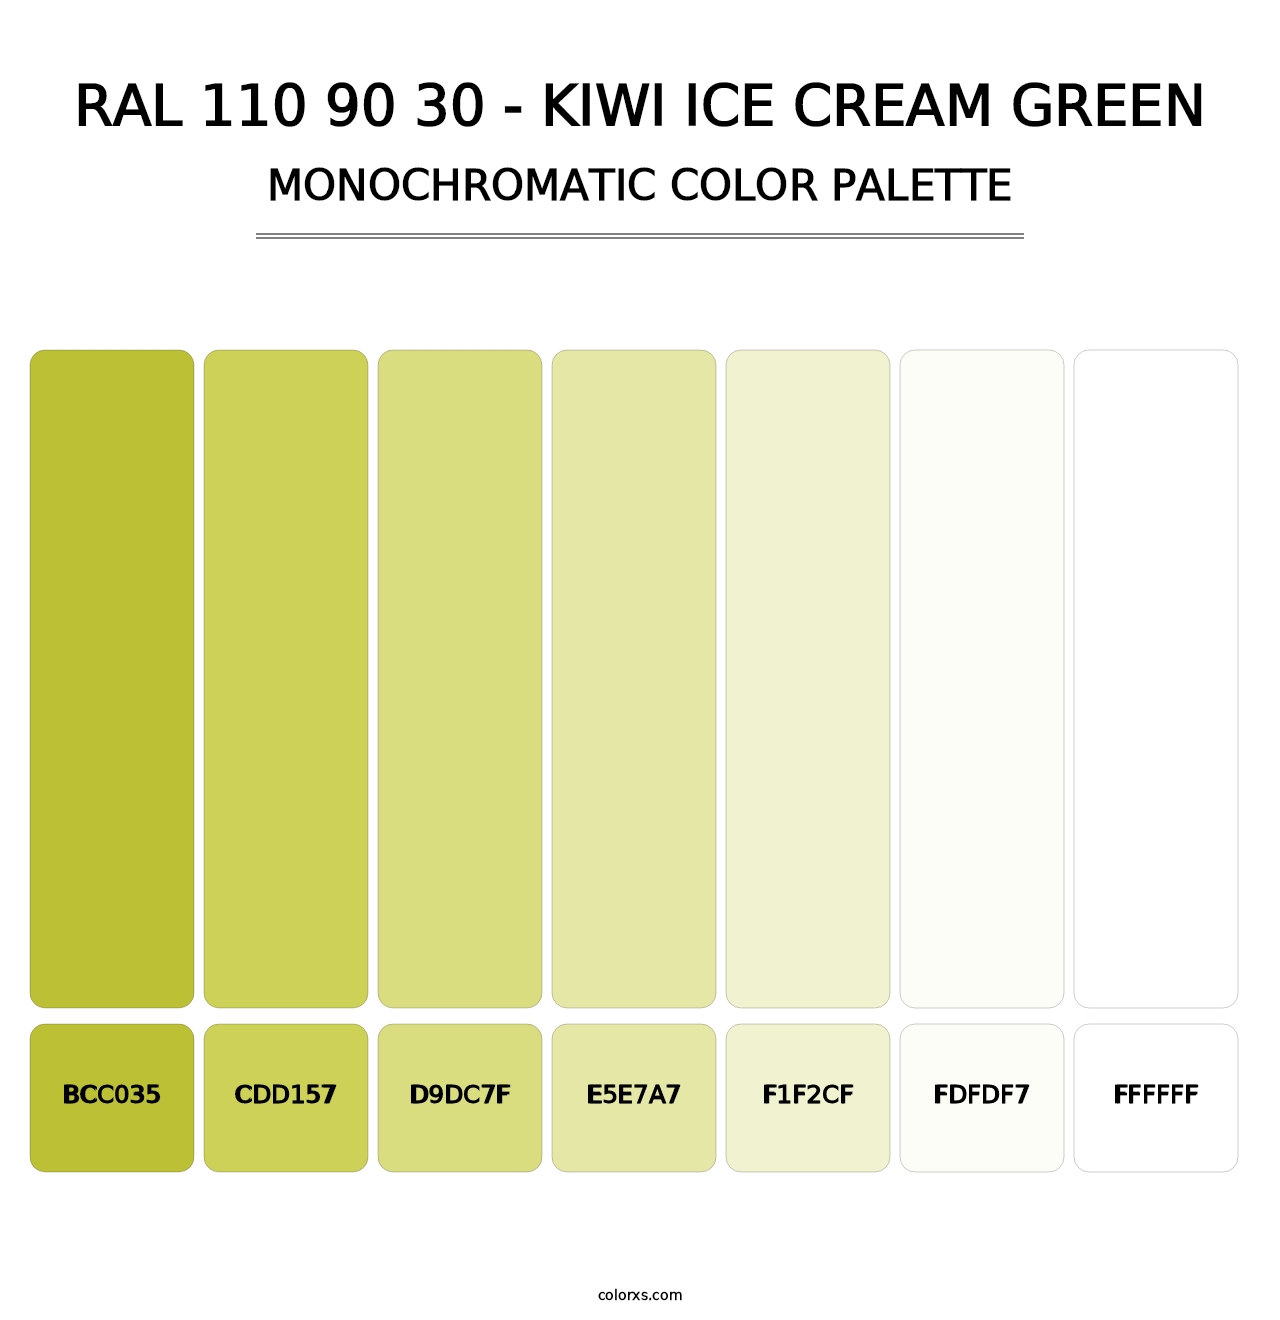 RAL 110 90 30 - Kiwi Ice Cream Green - Monochromatic Color Palette